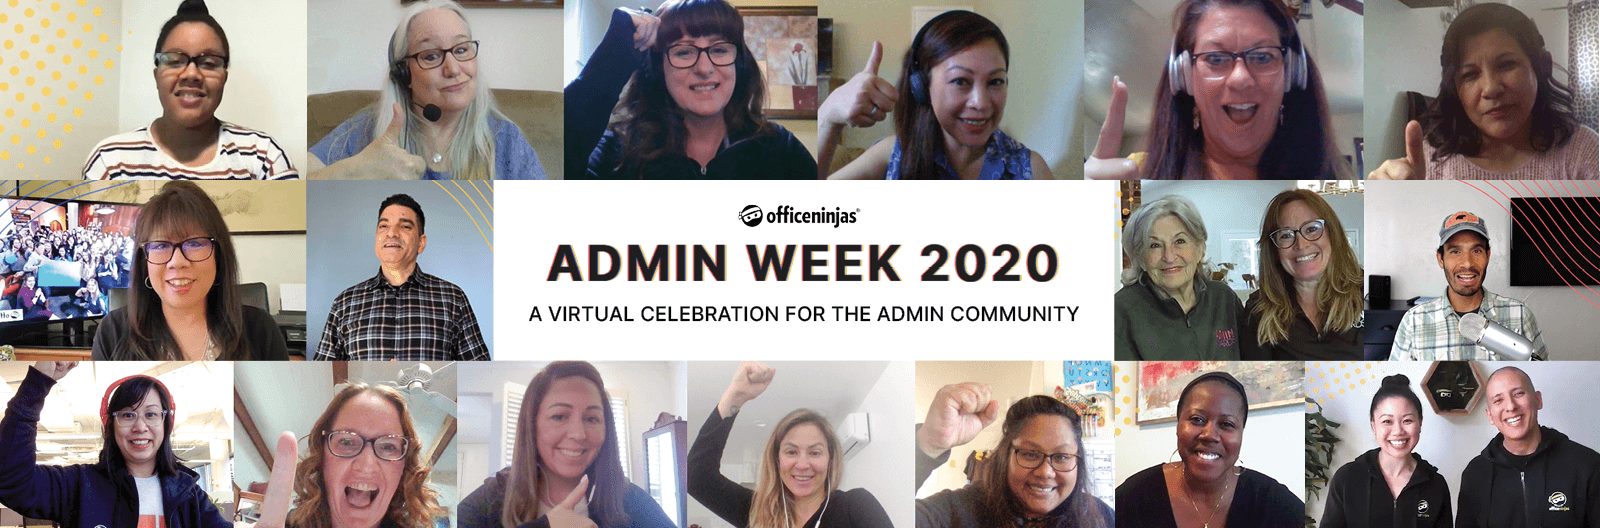 Admin Week 2020: A Virtual Celebration for the Admin Community